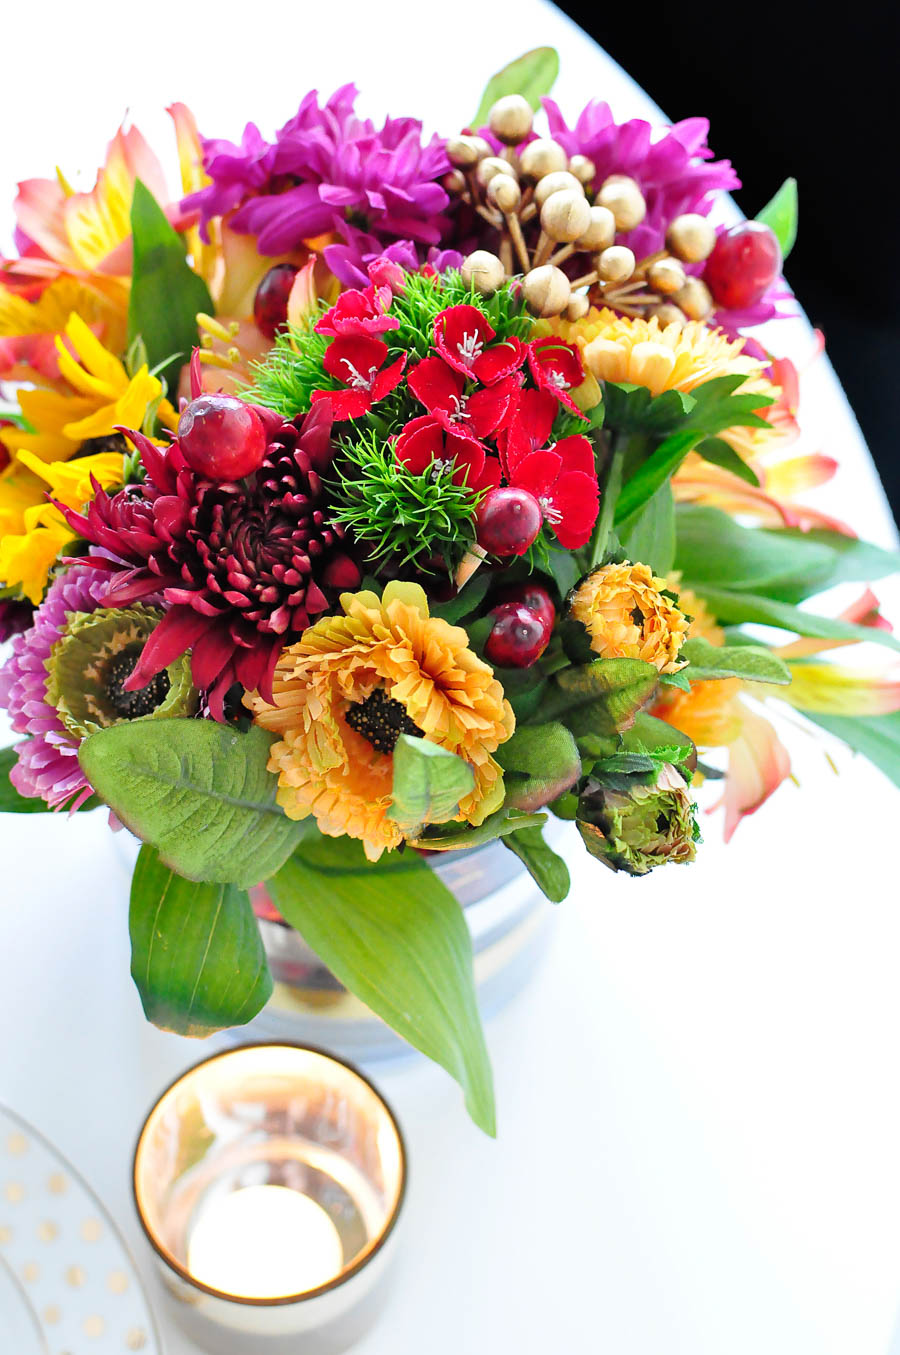 Floral centerpiece tablescape with cranberry vase for fall dining room decor. | #floraldesign #floral #falldecor #falldecorideas #monicawantsit #flowerarrangements